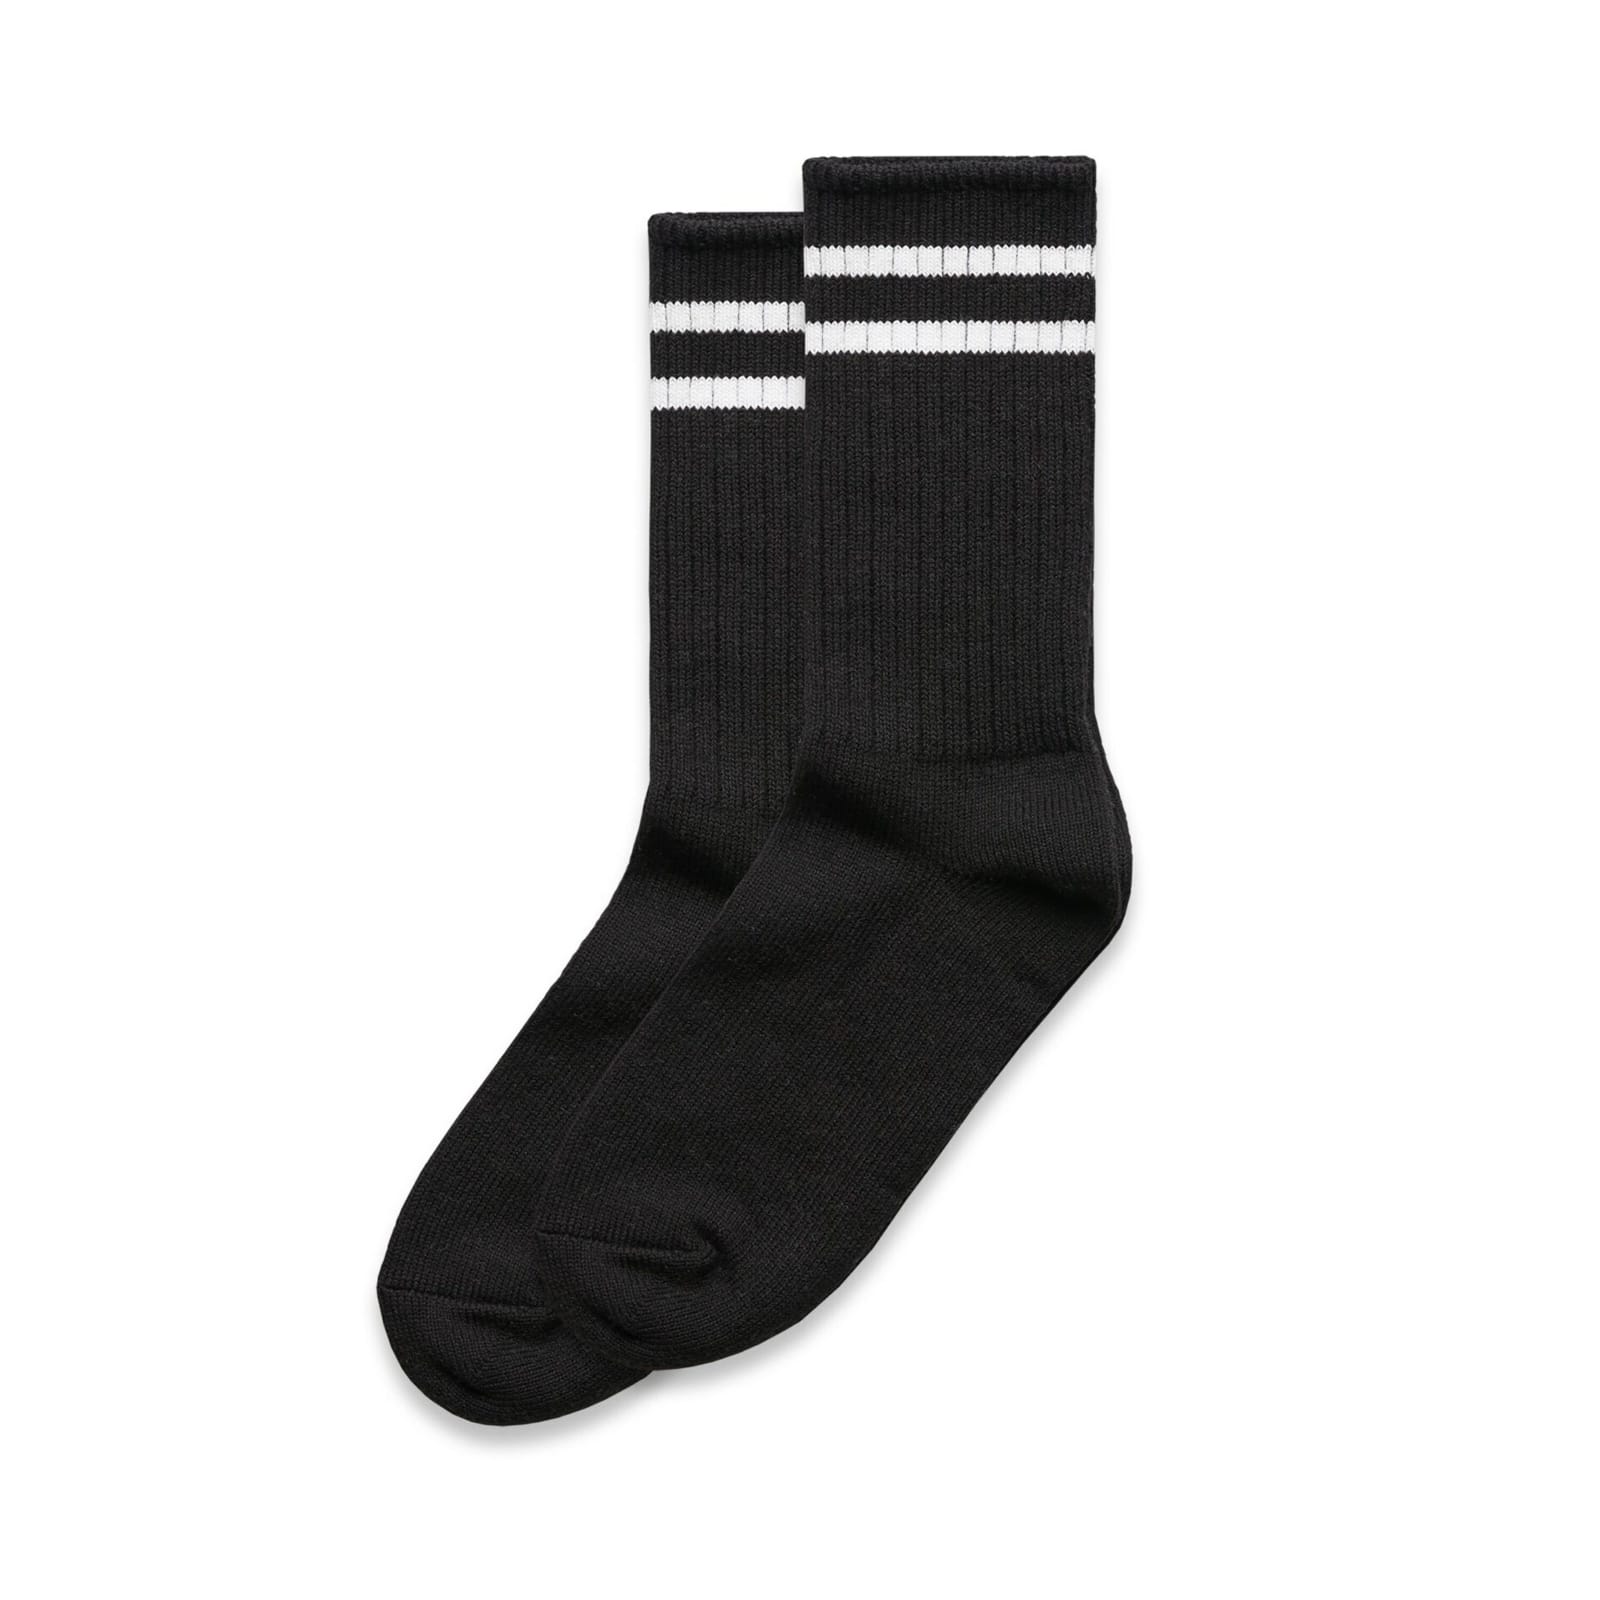 Black school socks with white stripes - Tekiria General Suppliers LTD